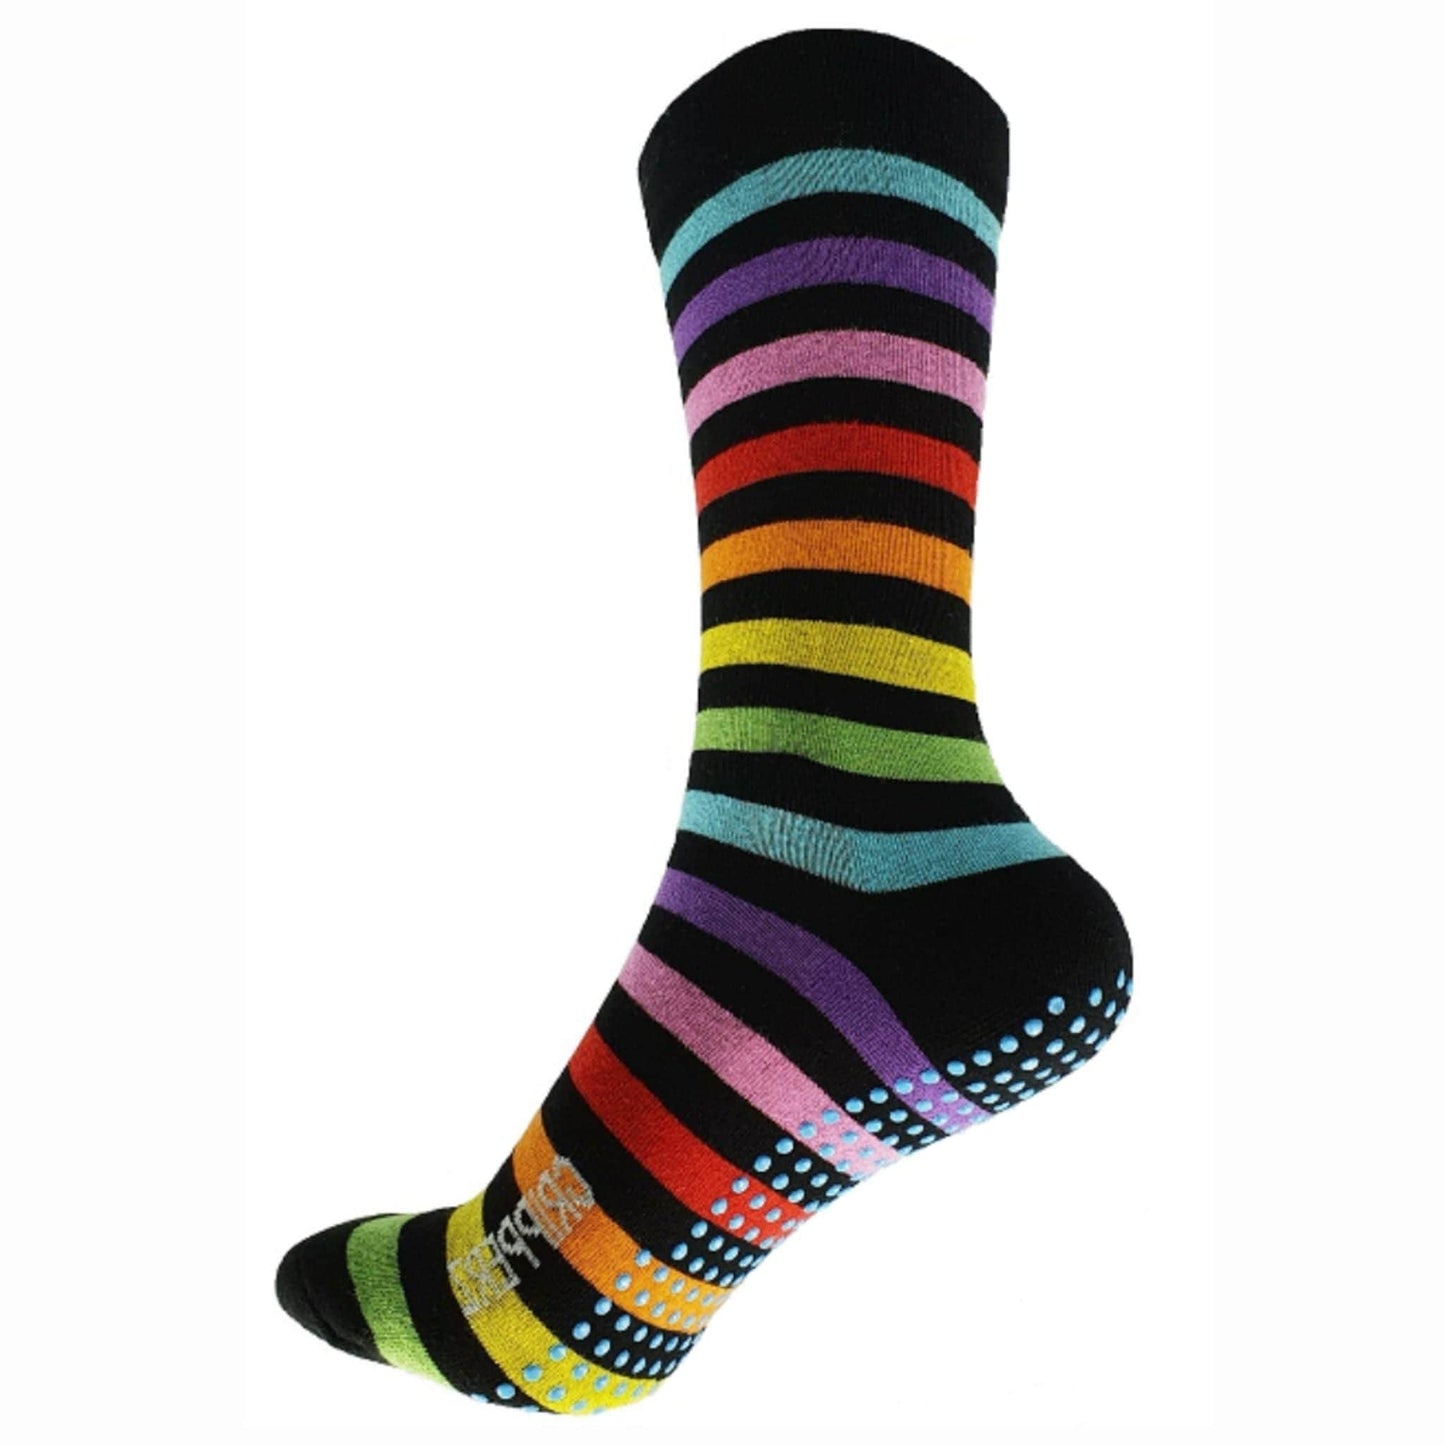 Gripperz Kids/ Adults Grip Socks - Non Slip Circulation Socks - Caring Clothing